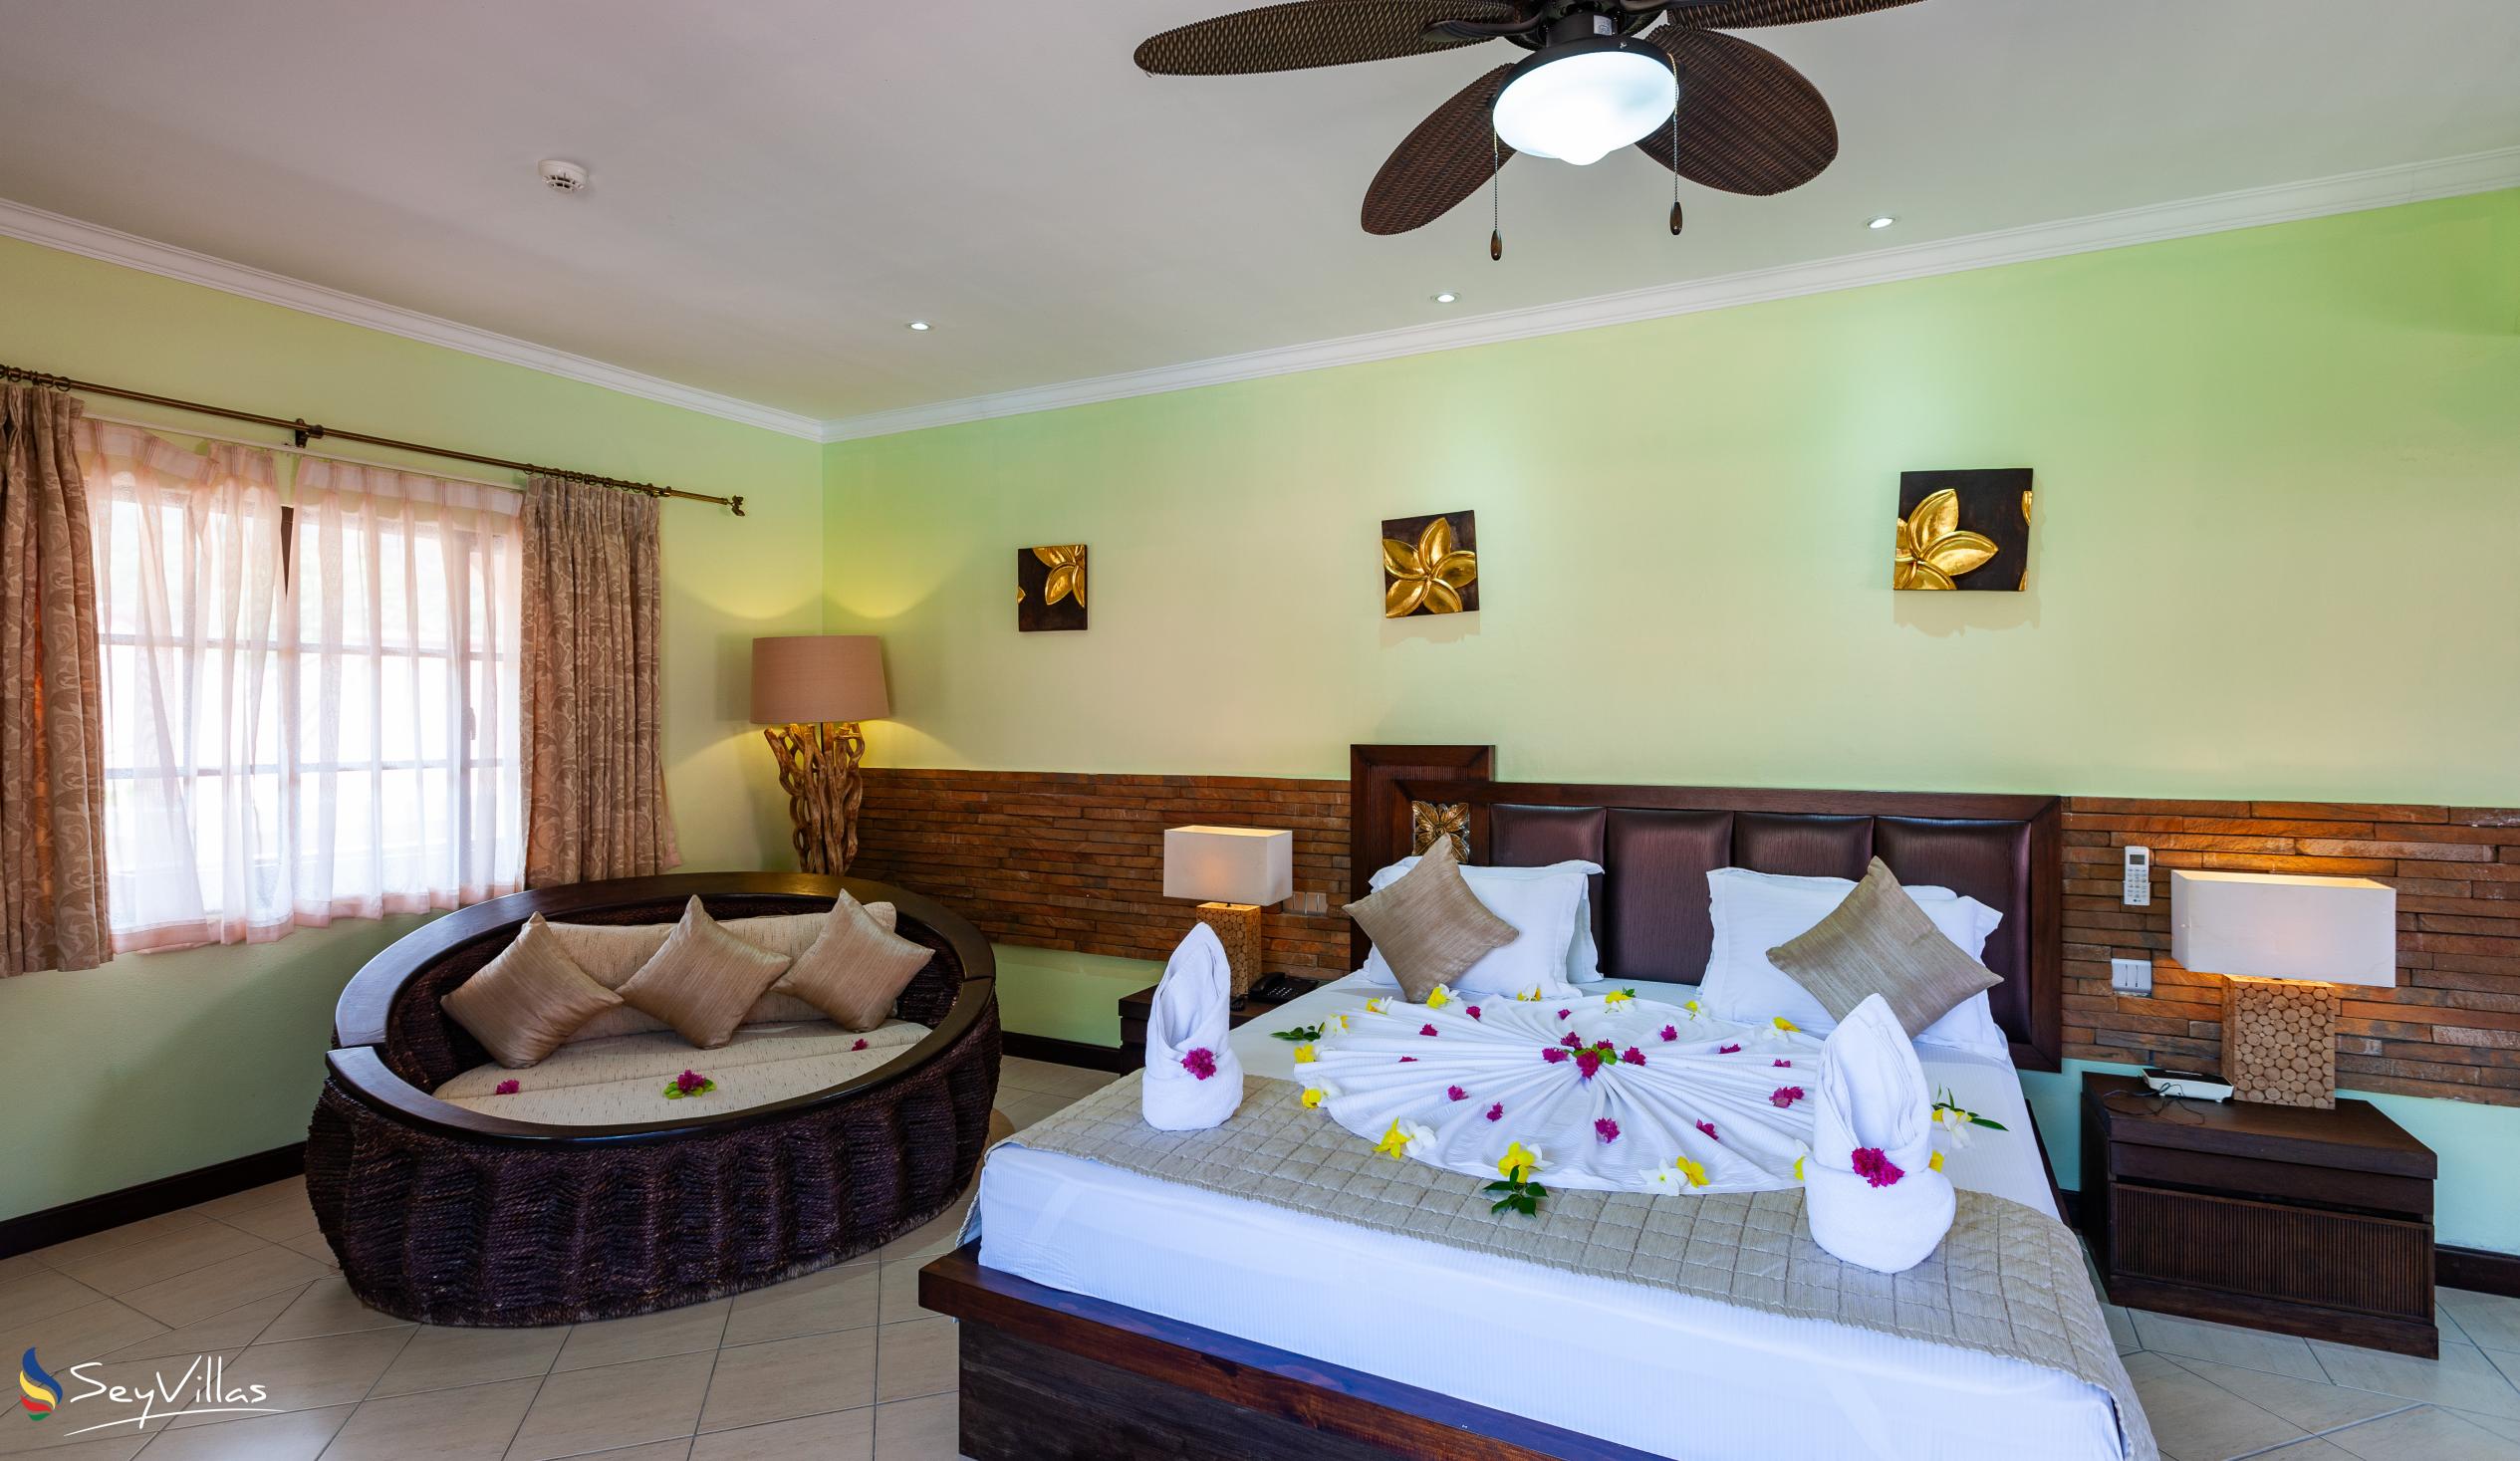 Foto 55: Oasis Hotel, Restaurant & Spa - Camera Deluxe - Praslin (Seychelles)